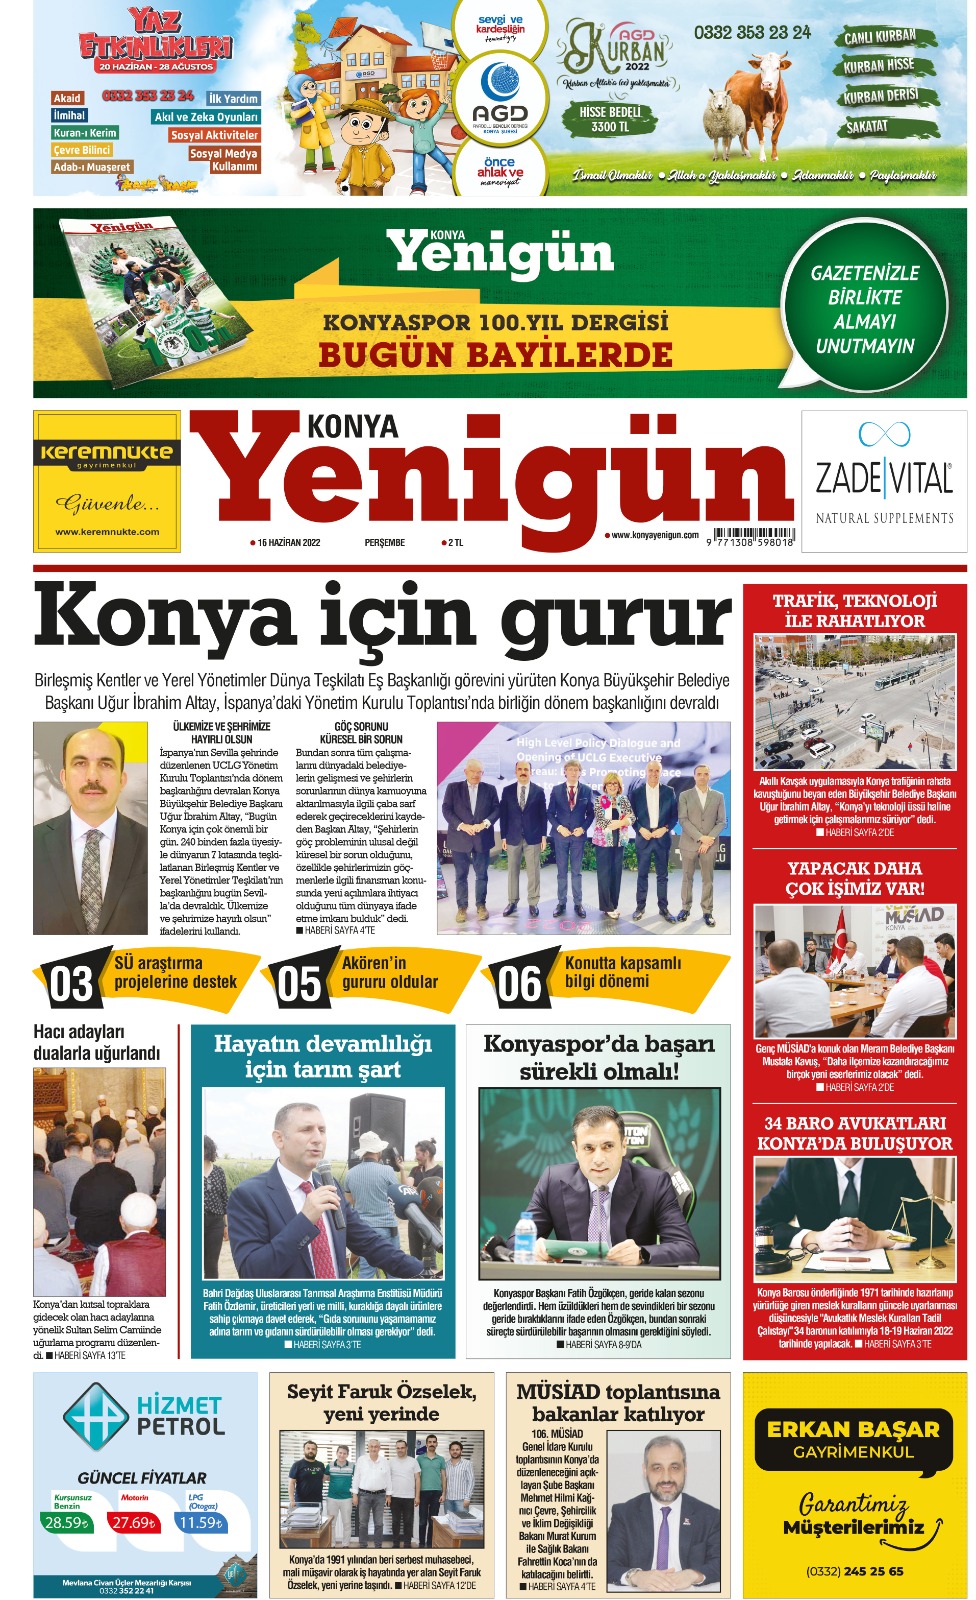 Konya Yenigün Gazetesi - 16.06.2022 Manşeti